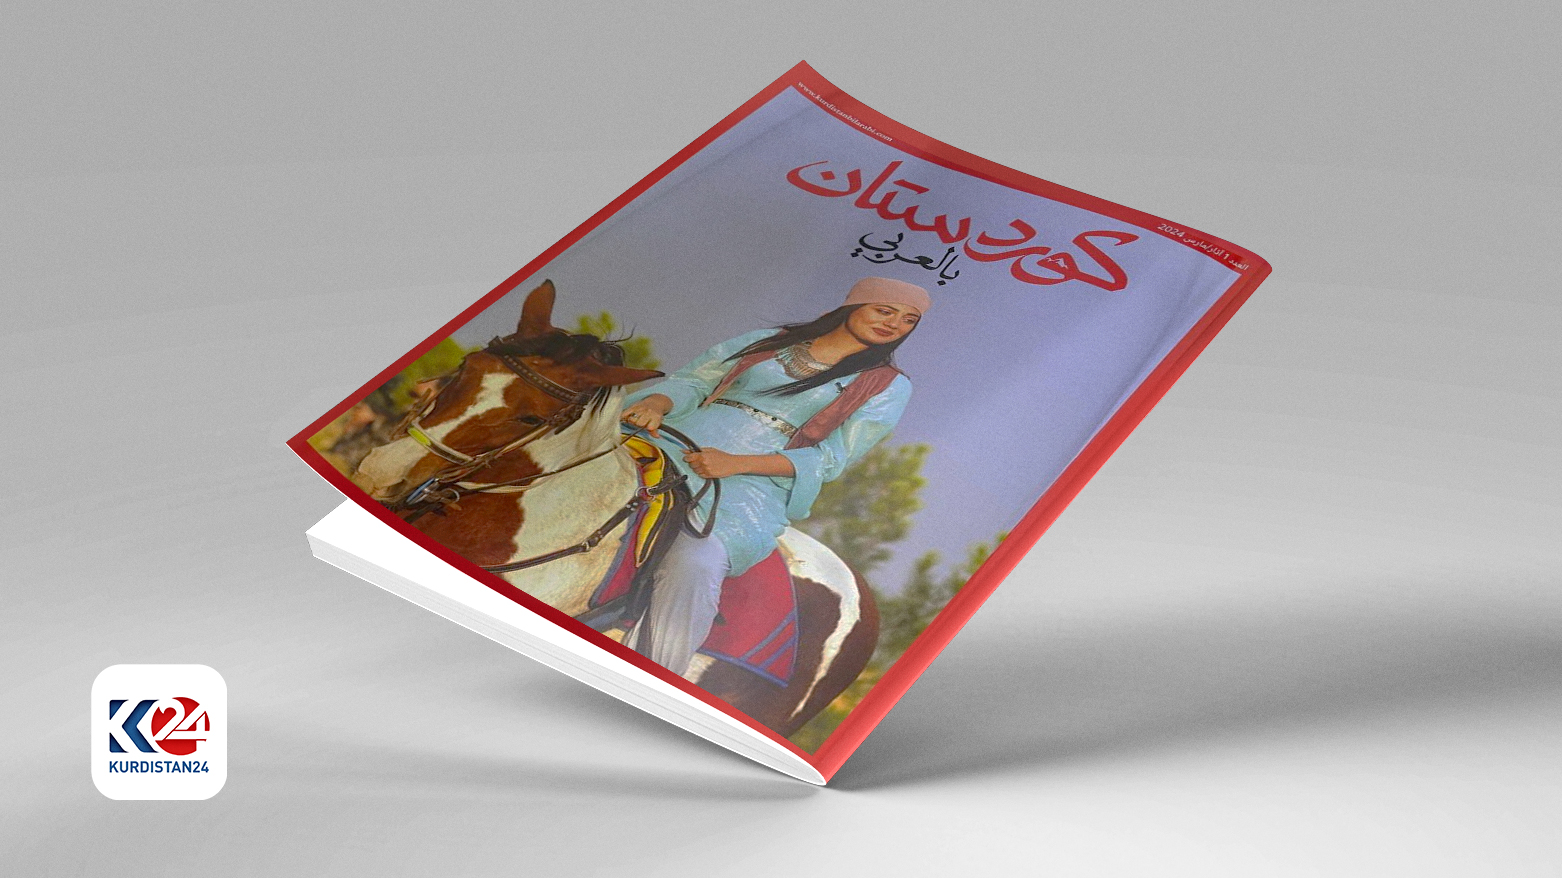 The cover of the Kurdistan in Arabic magazine. (Photo: Designed by Kurdistan24)